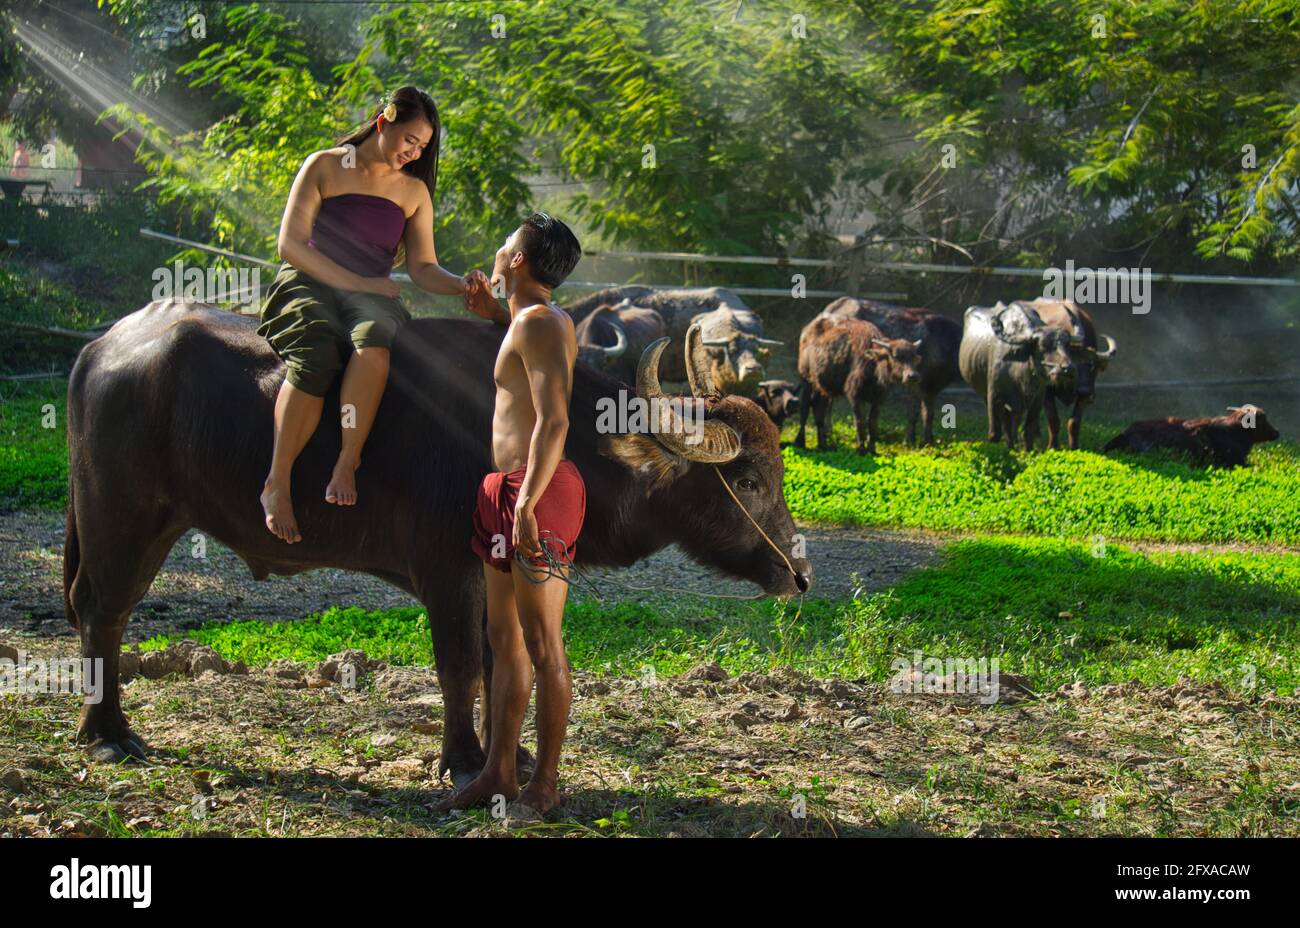 Couple farmer in farmer suit with buffalo, Thailand countryside Stock Photo